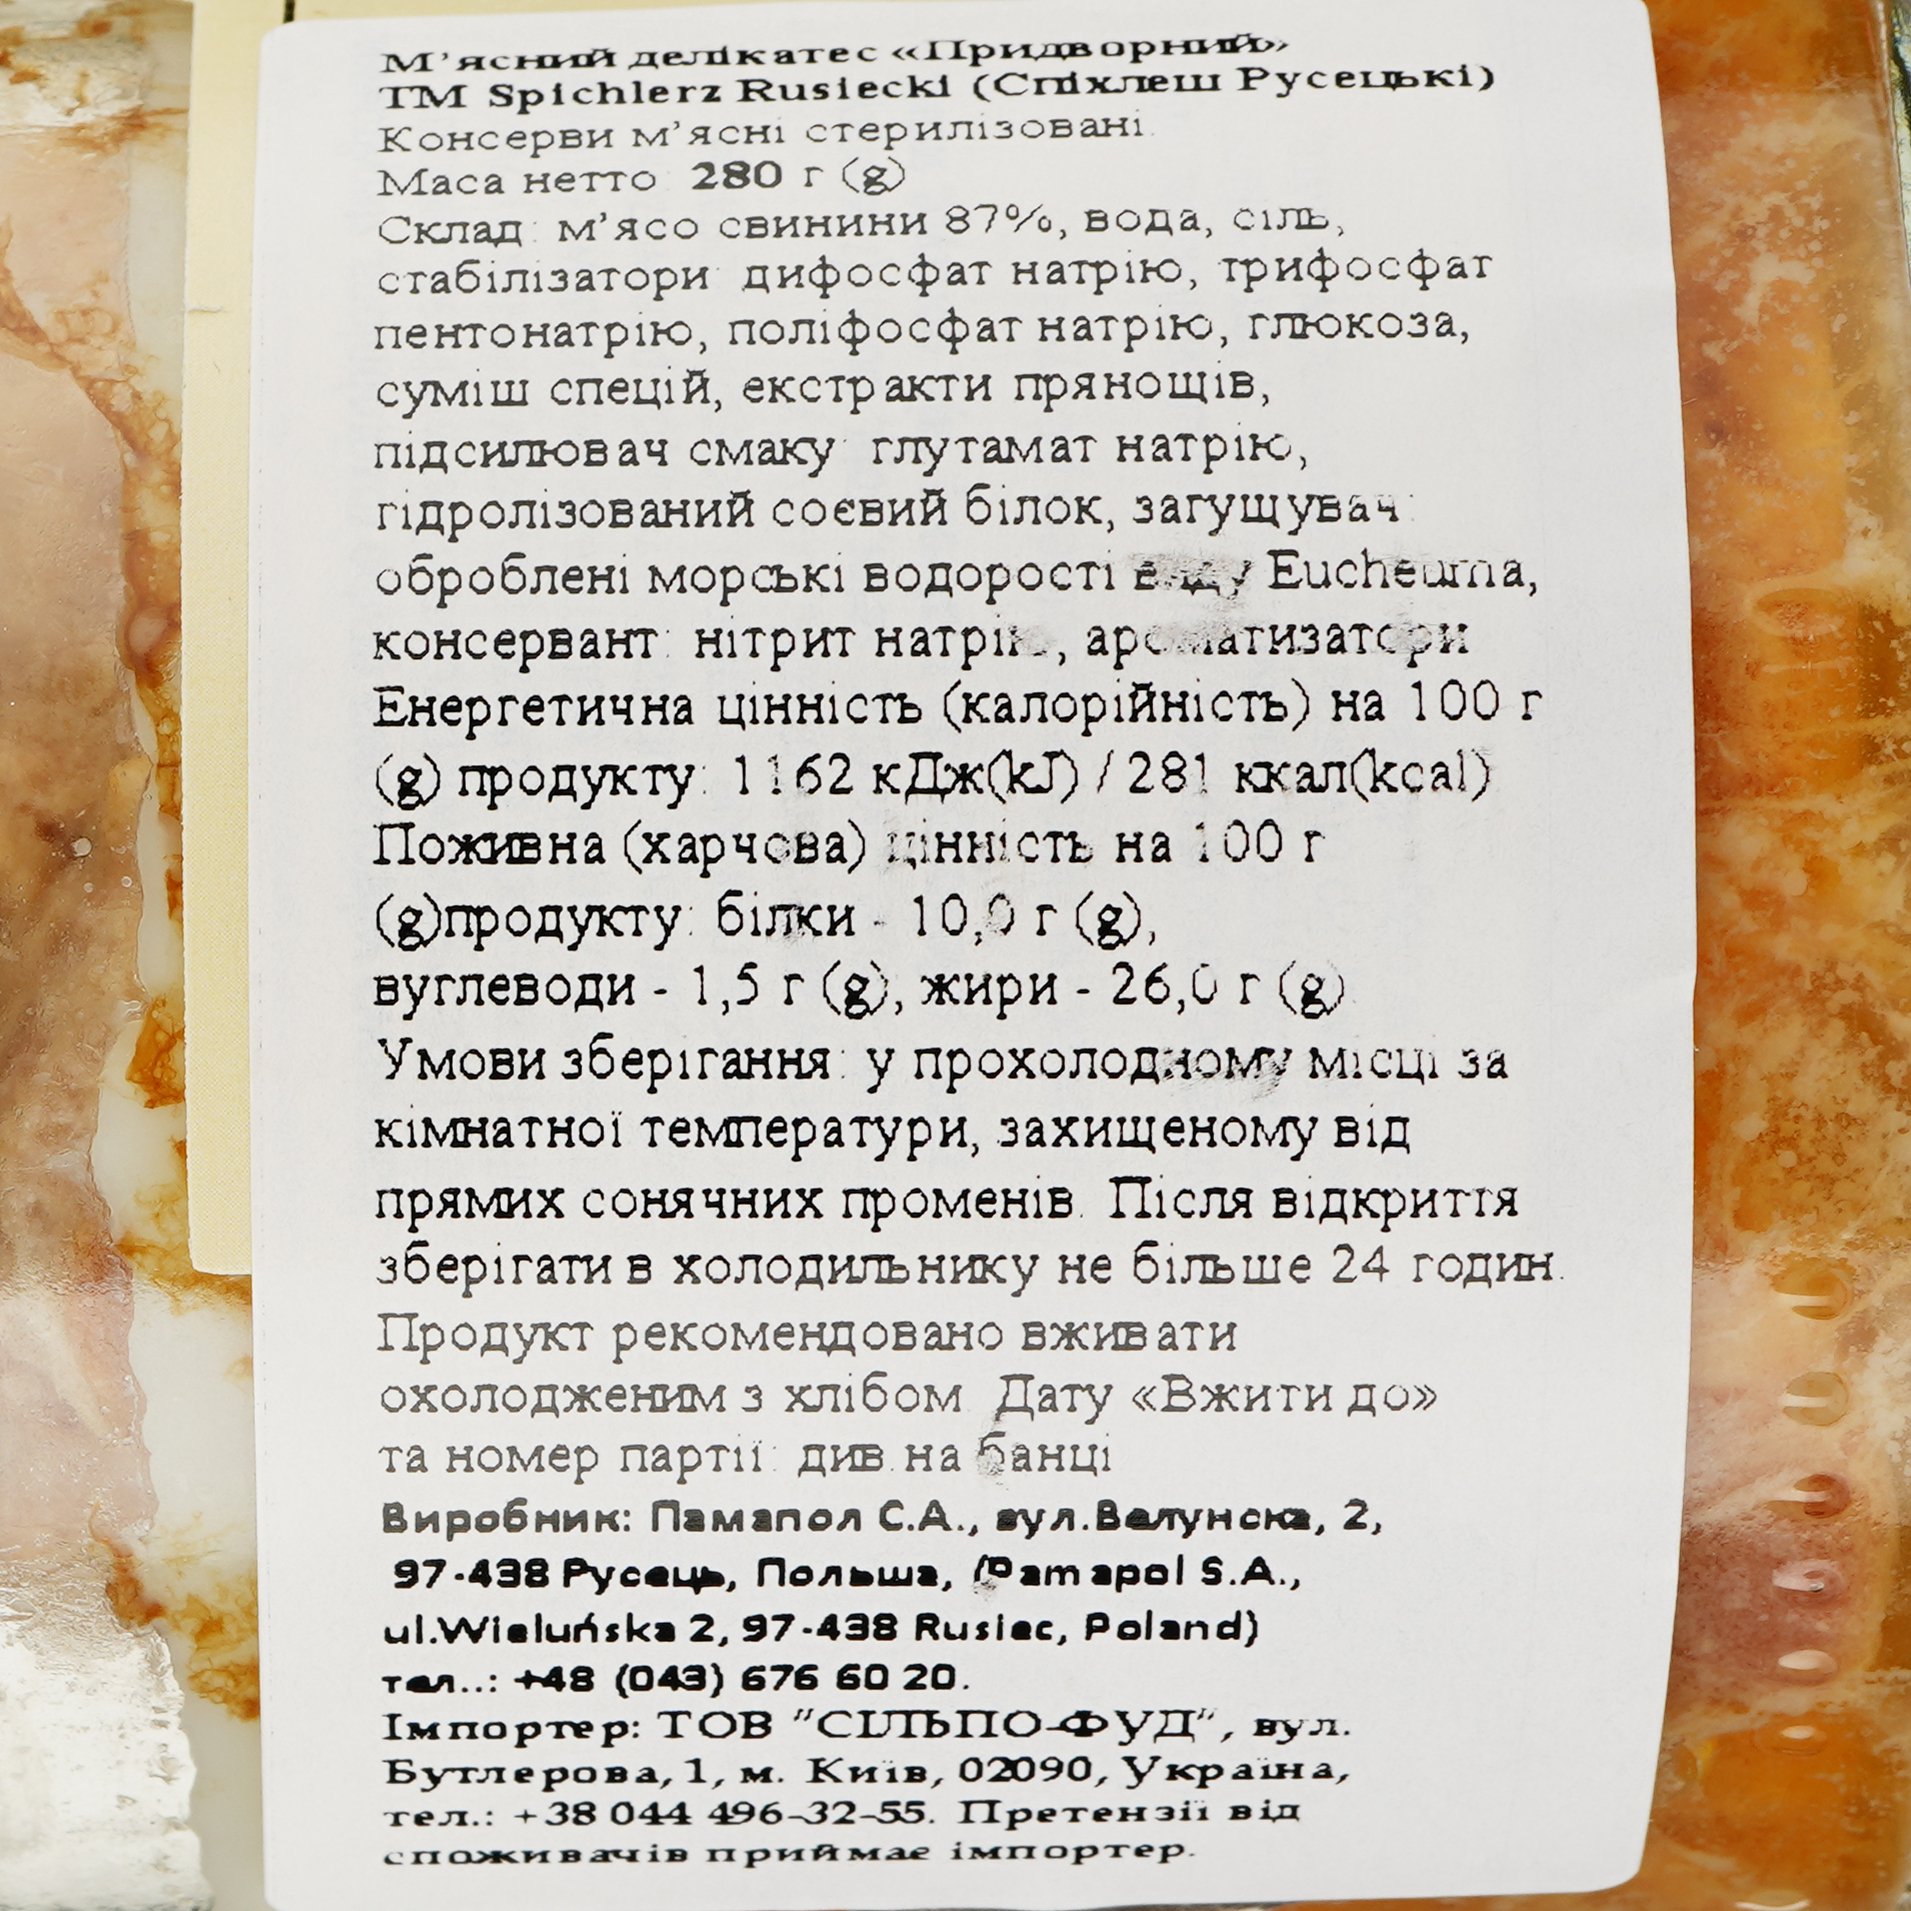 Мясной деликатес Spichlerz Rusiecki Dworski 280 г (538091) - фото 3